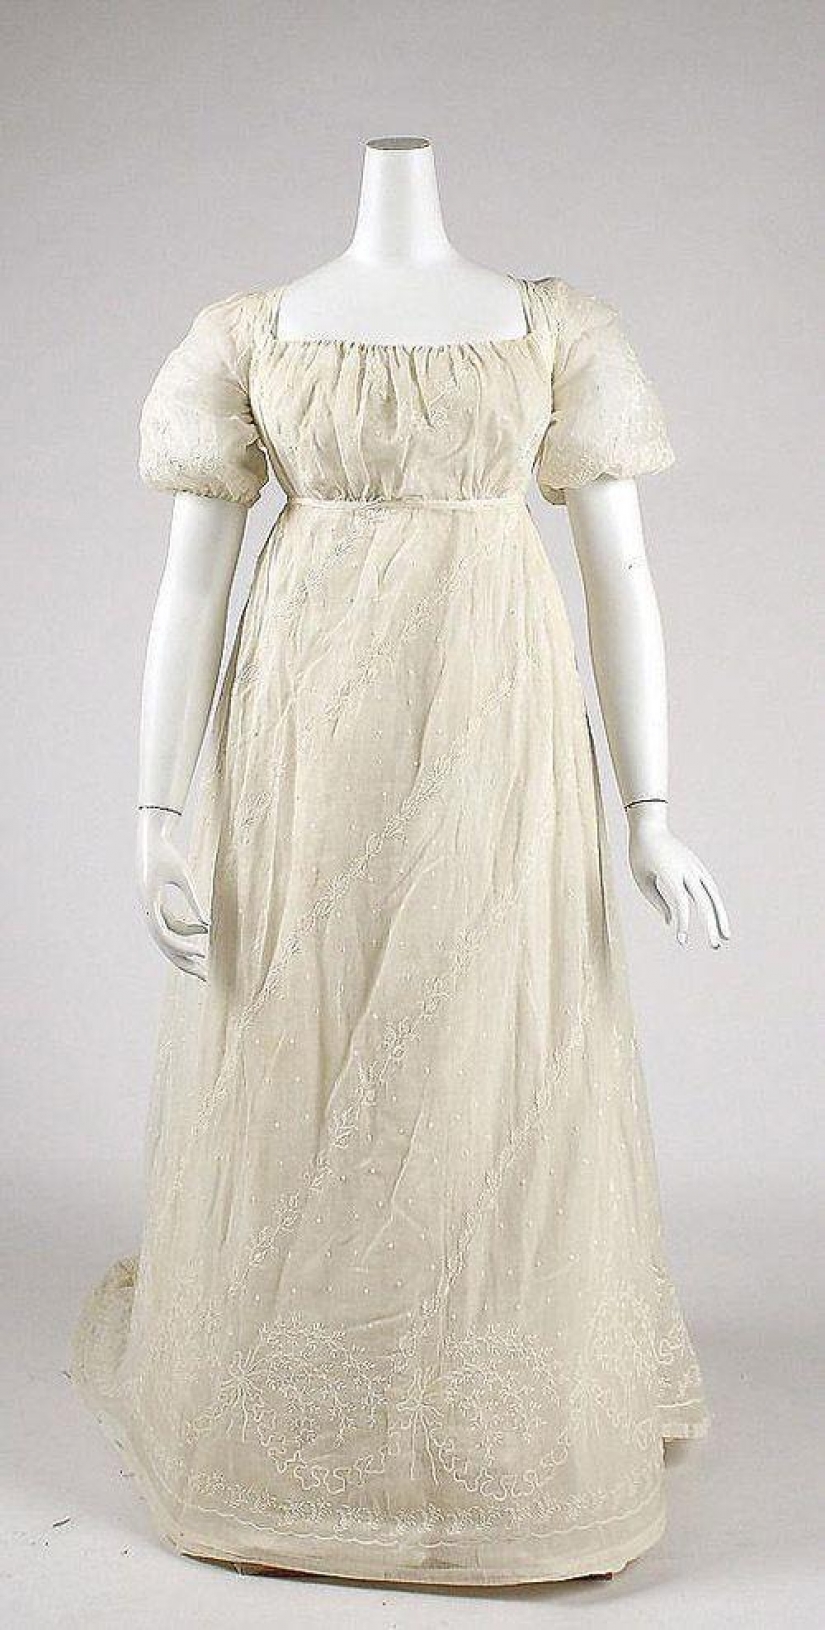 Платье Ампир 19 век